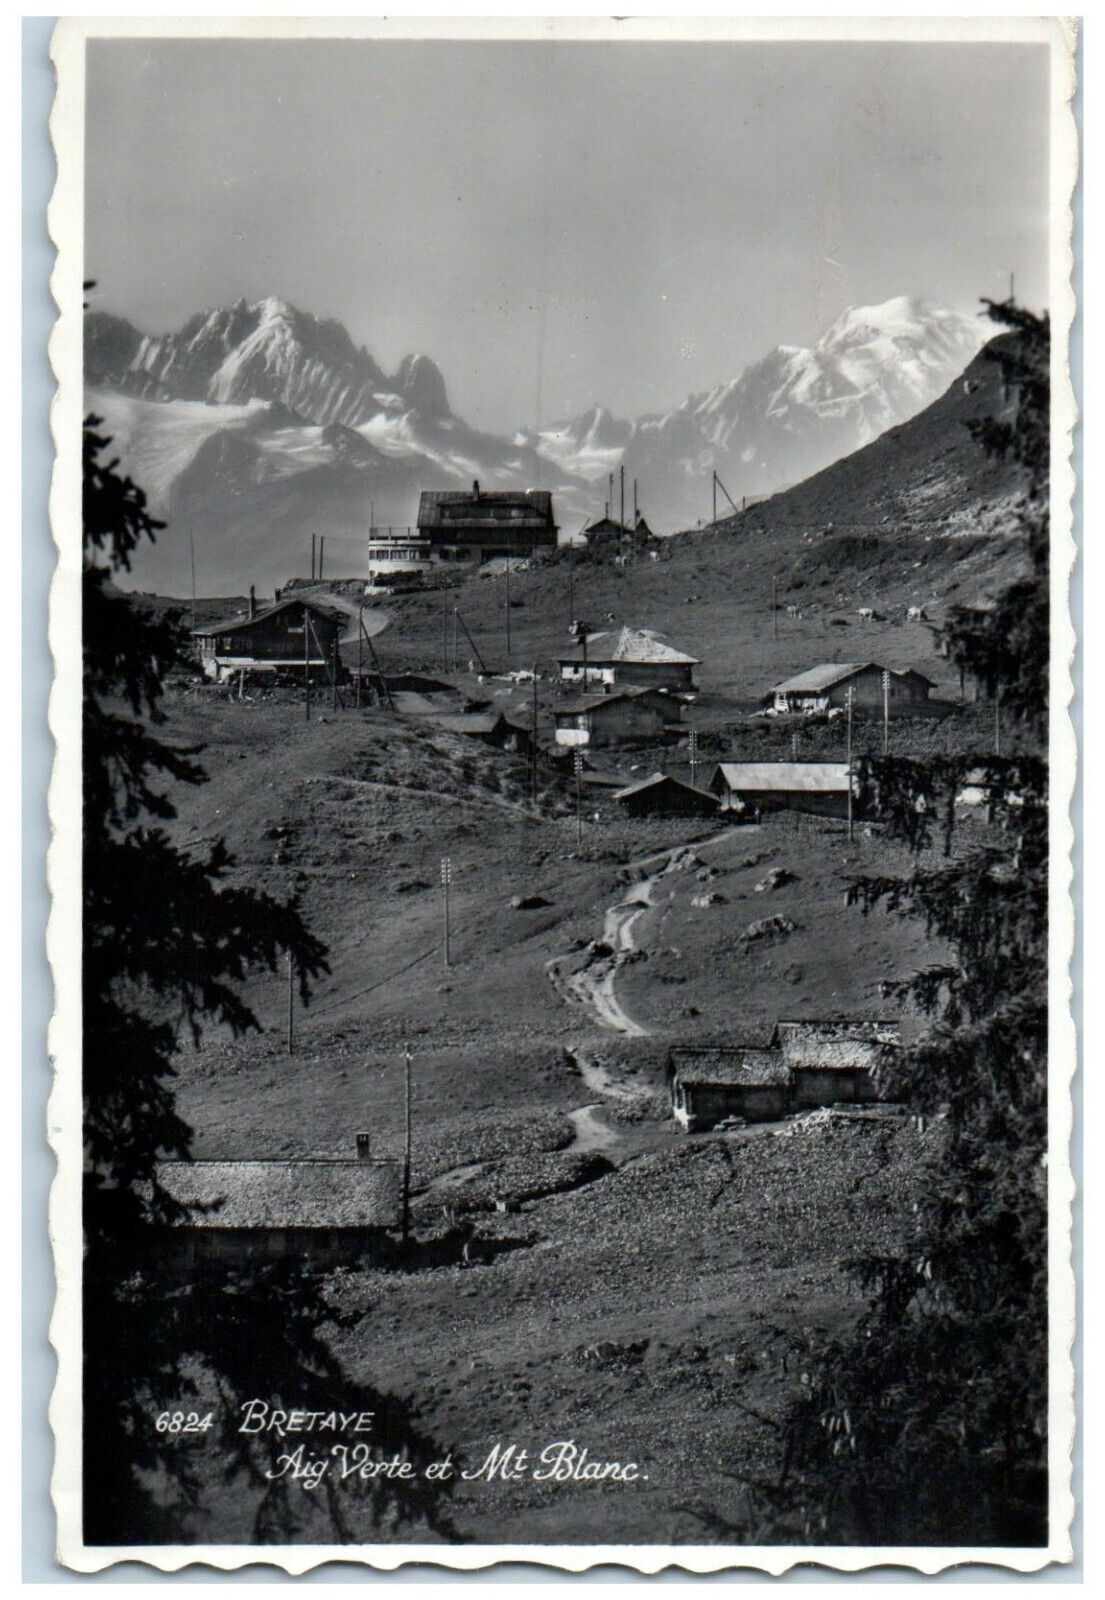 1954 Aig. Verte Et Mont Blanc. Bretaye Ollon Switzerland RPPC Photo Postcard